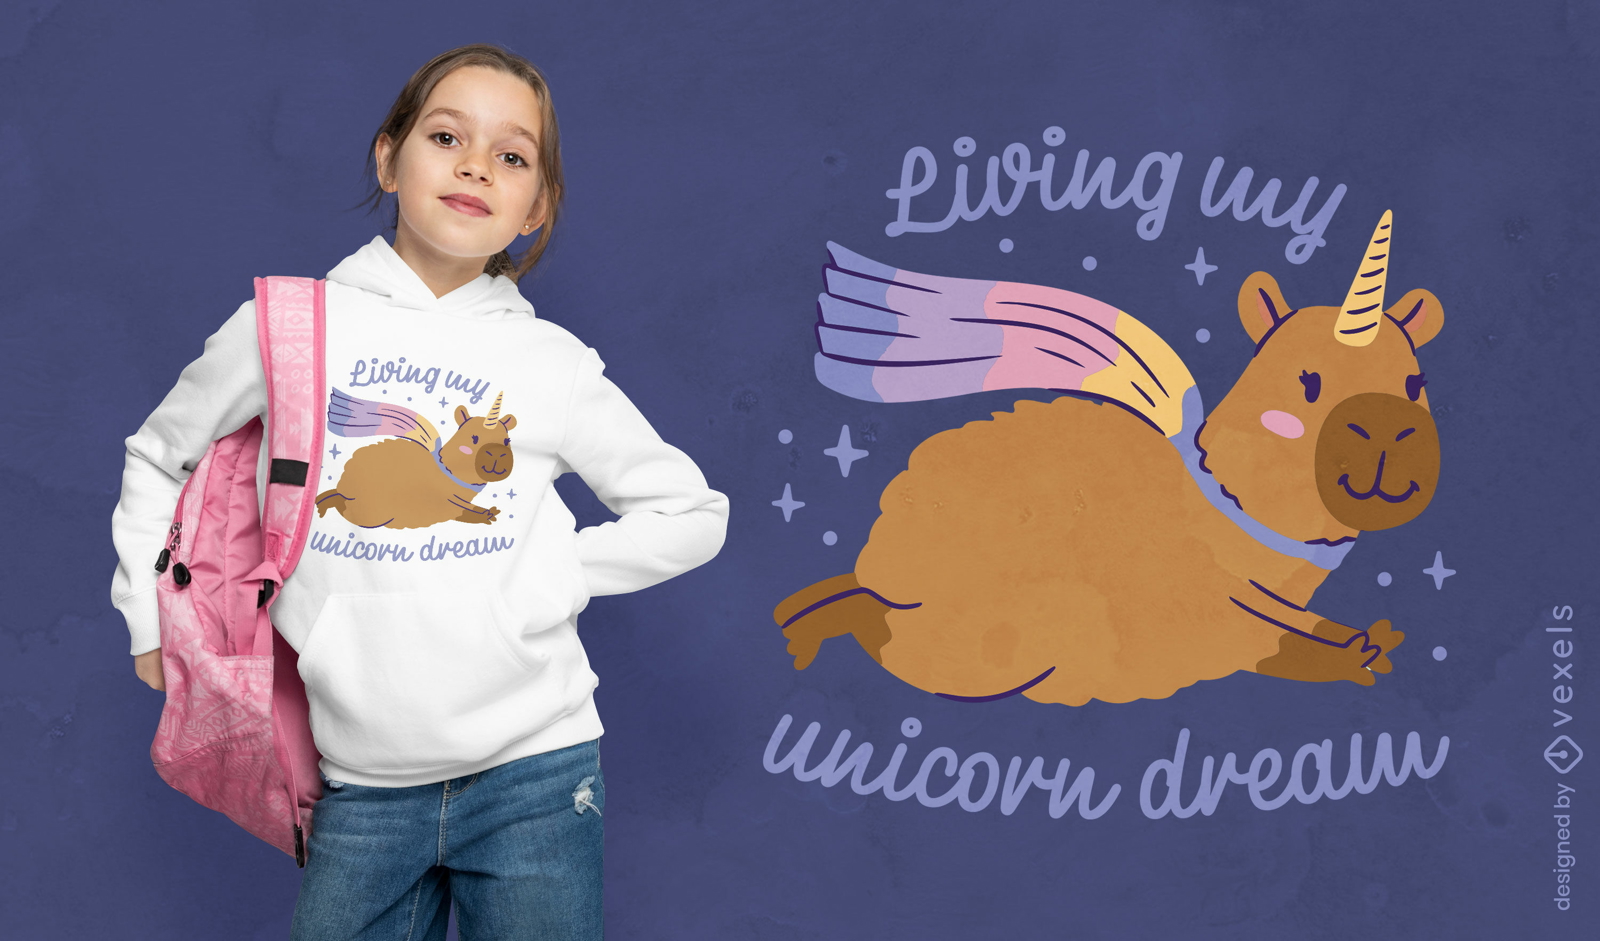 Unicorn dream capybara t-shirt design